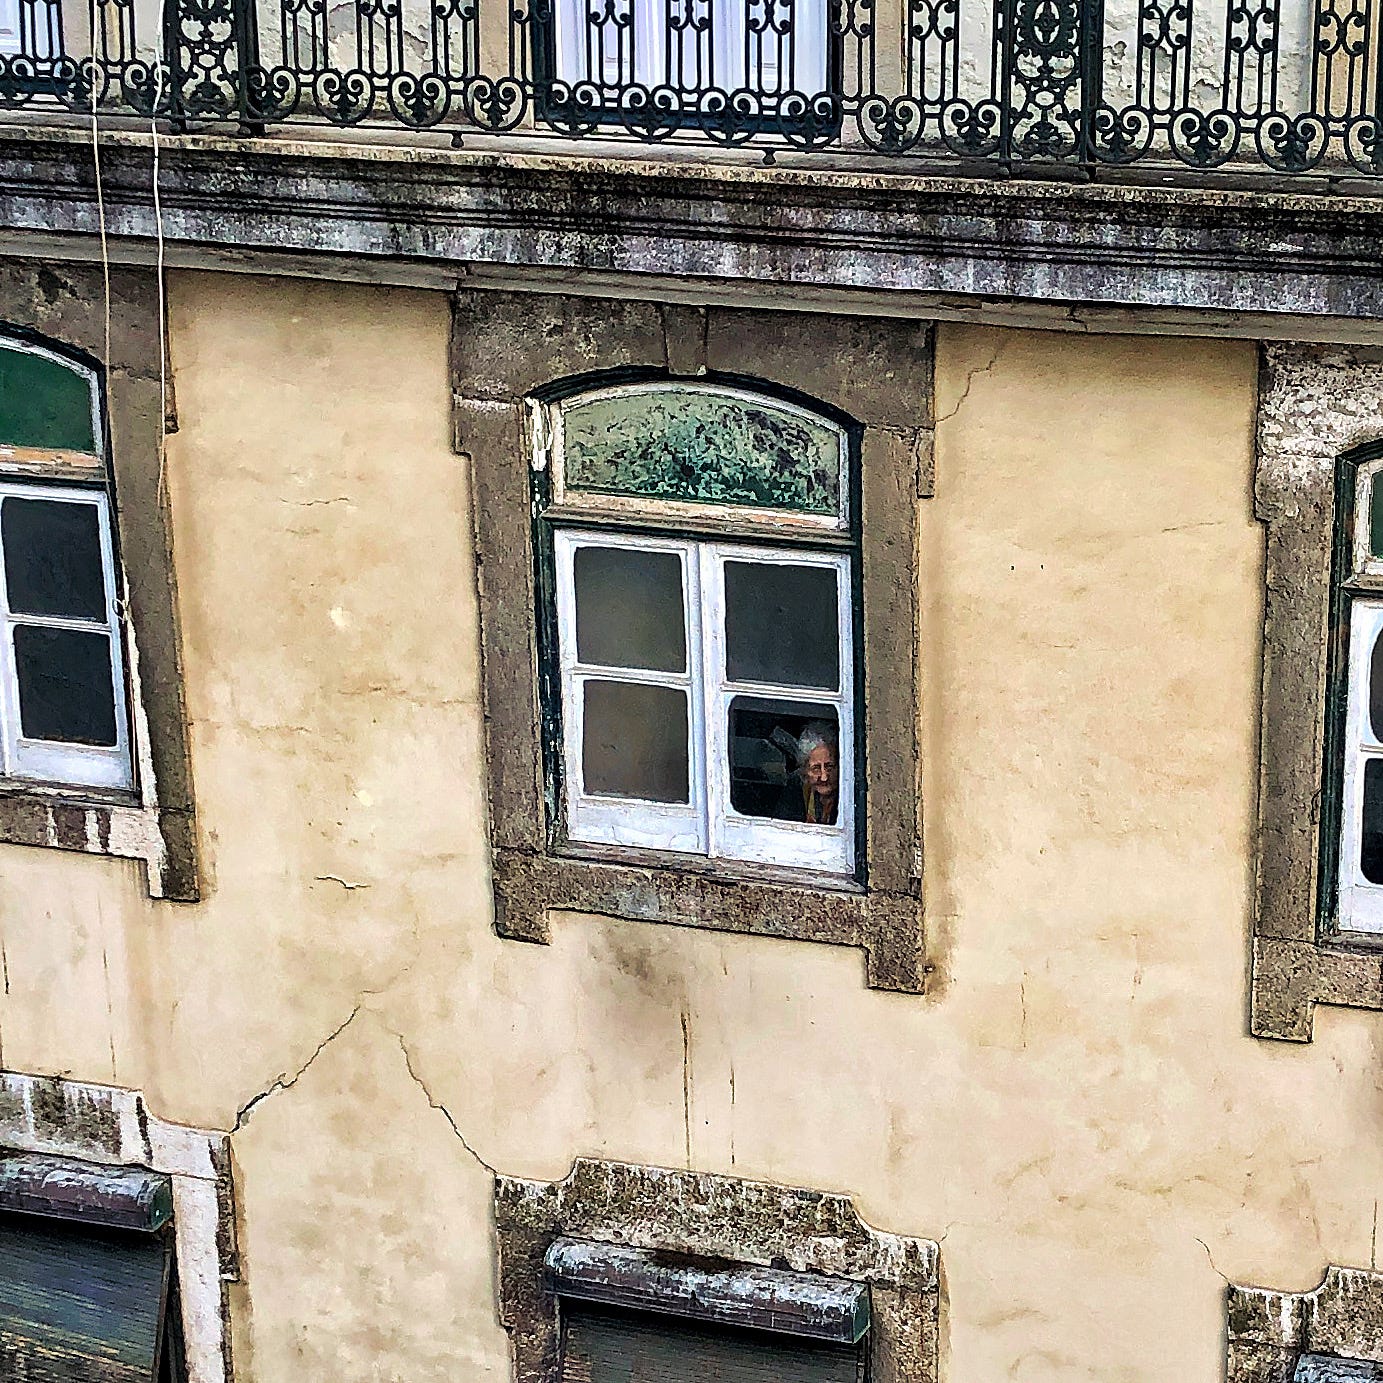 Elderly lady peeking out of a window in the Chiado district of Lisbon, Portugal.